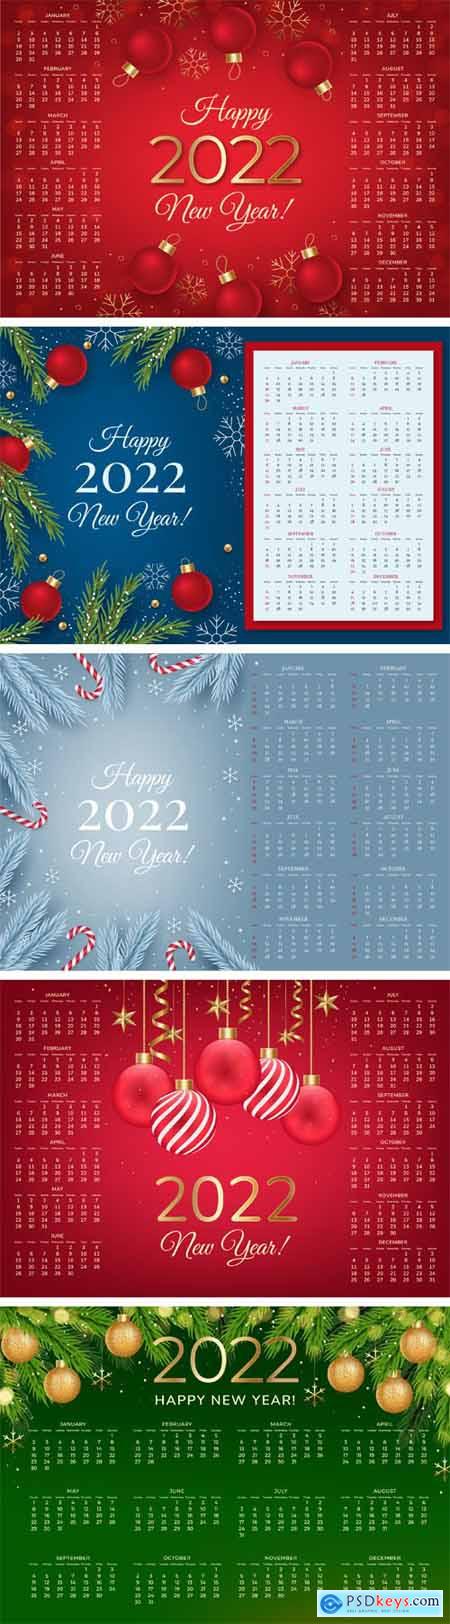 Realistic 2022 Calendars Vector Templates Collection